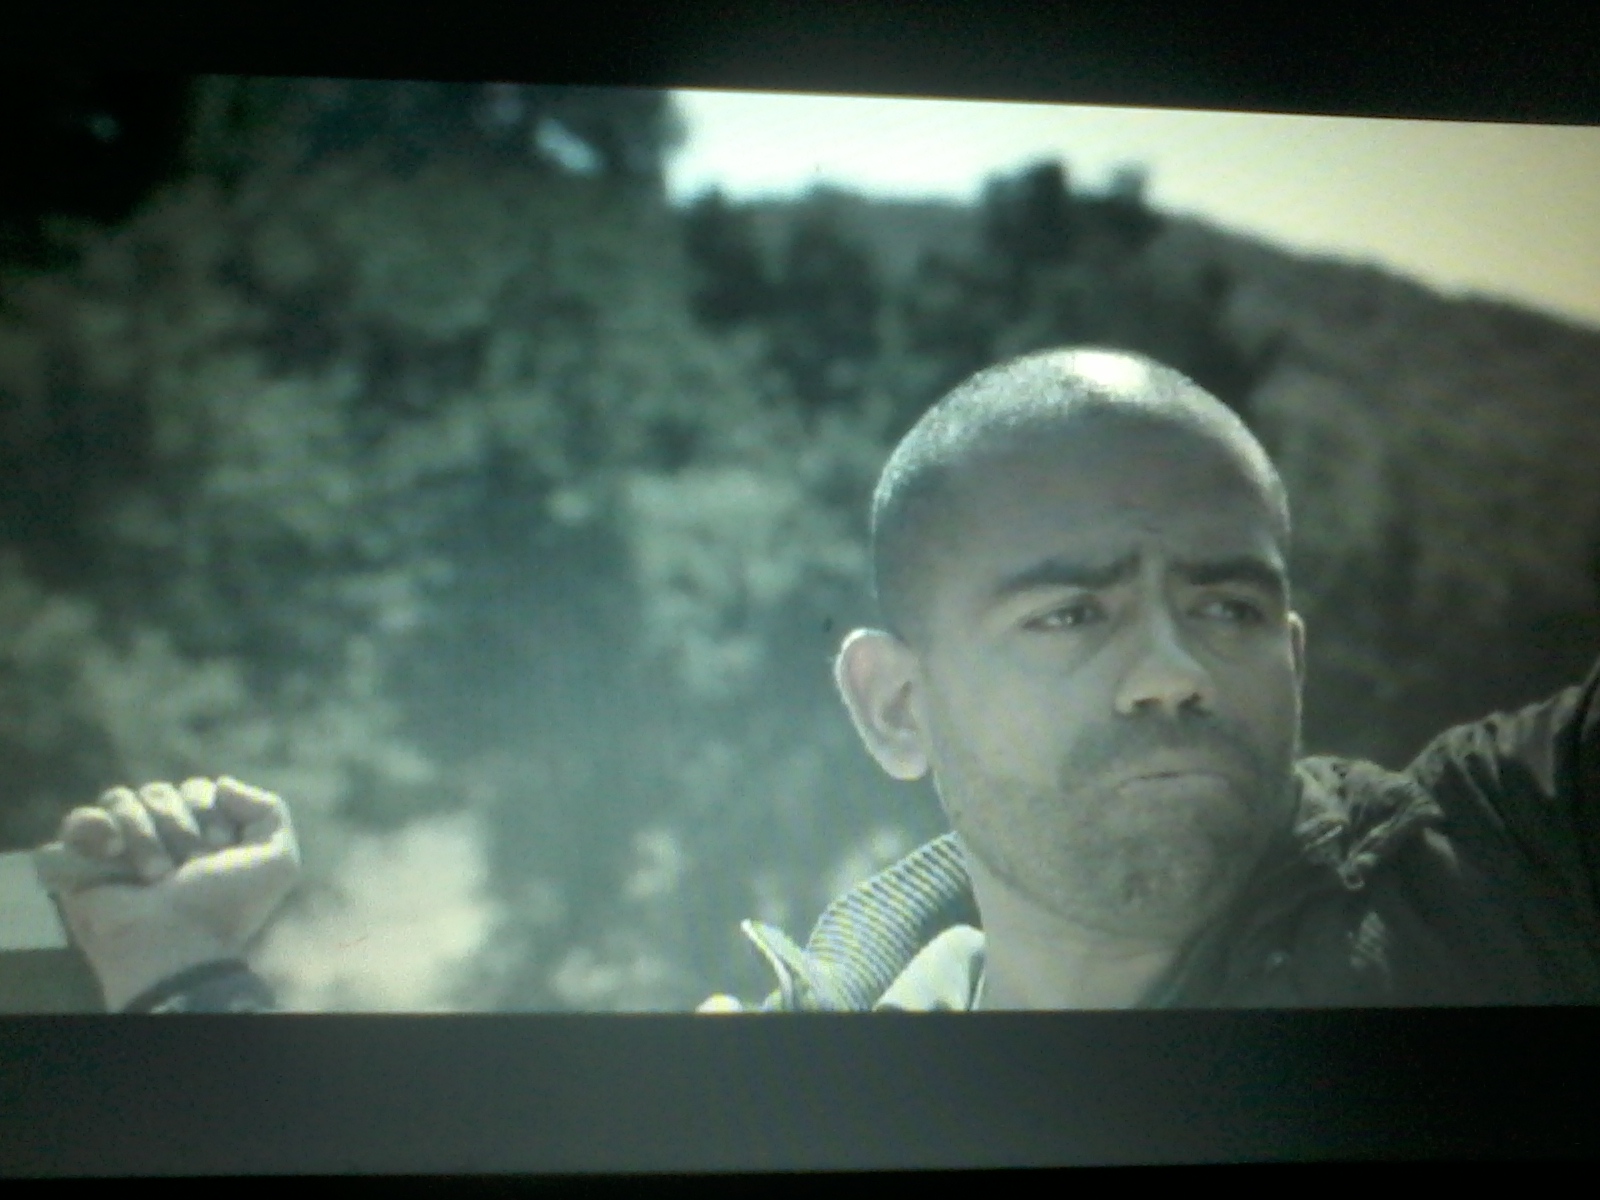 Eliezer Ortiz as Man in the film Death on A Hill.